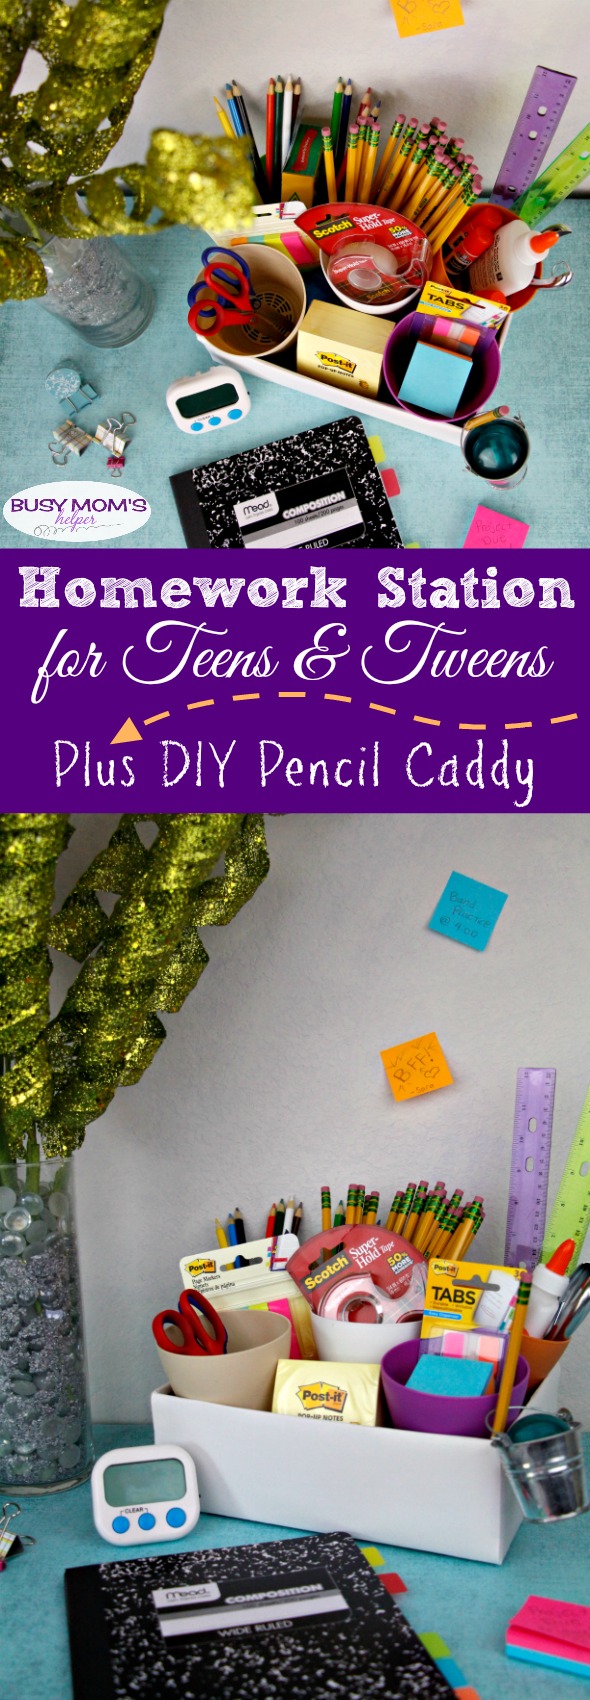 Homework Station for Teens & Tweens with DIY Pencil Caddy Tutorial #ad #BackToSchoolGoals18 #homework #teens #school